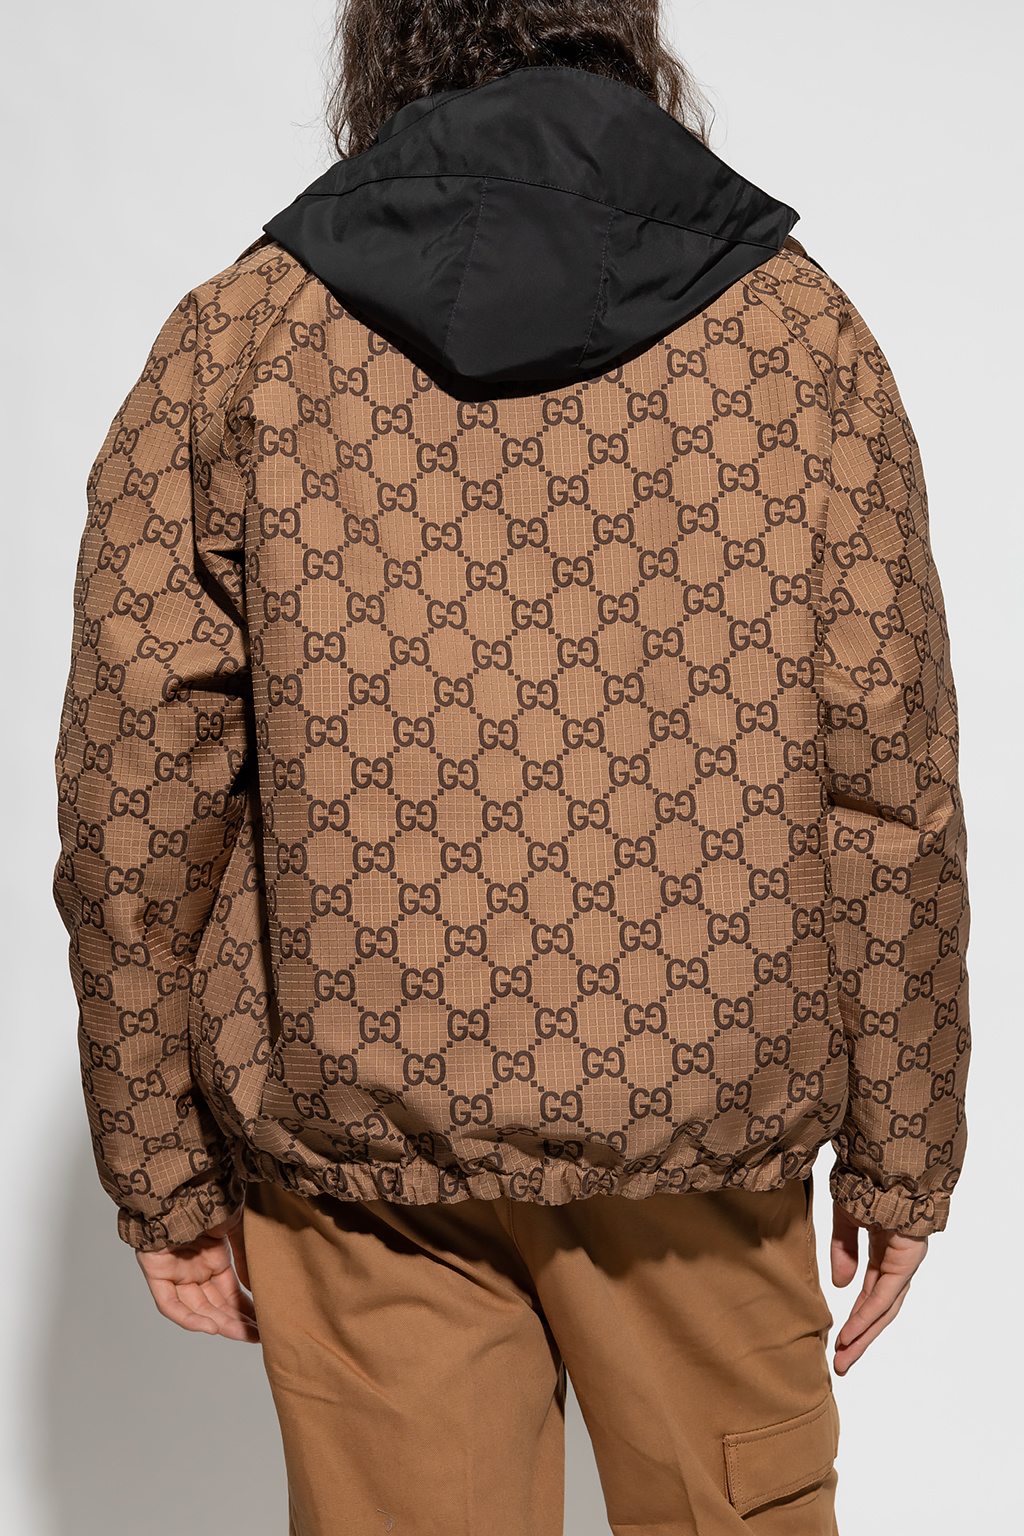 Gucci Reversible GG Jacket